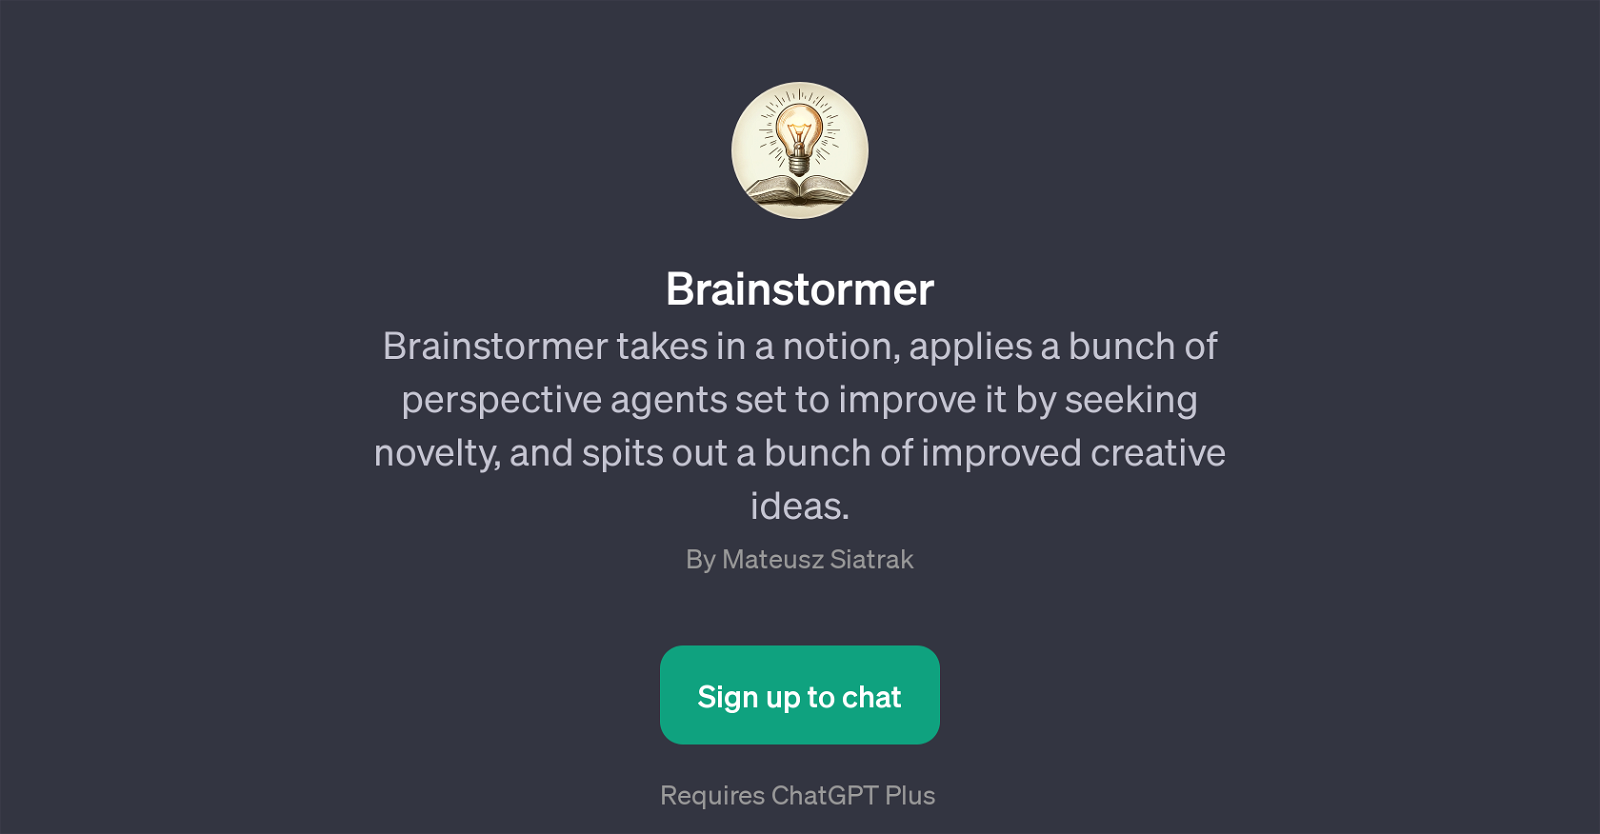 Brainstormer website